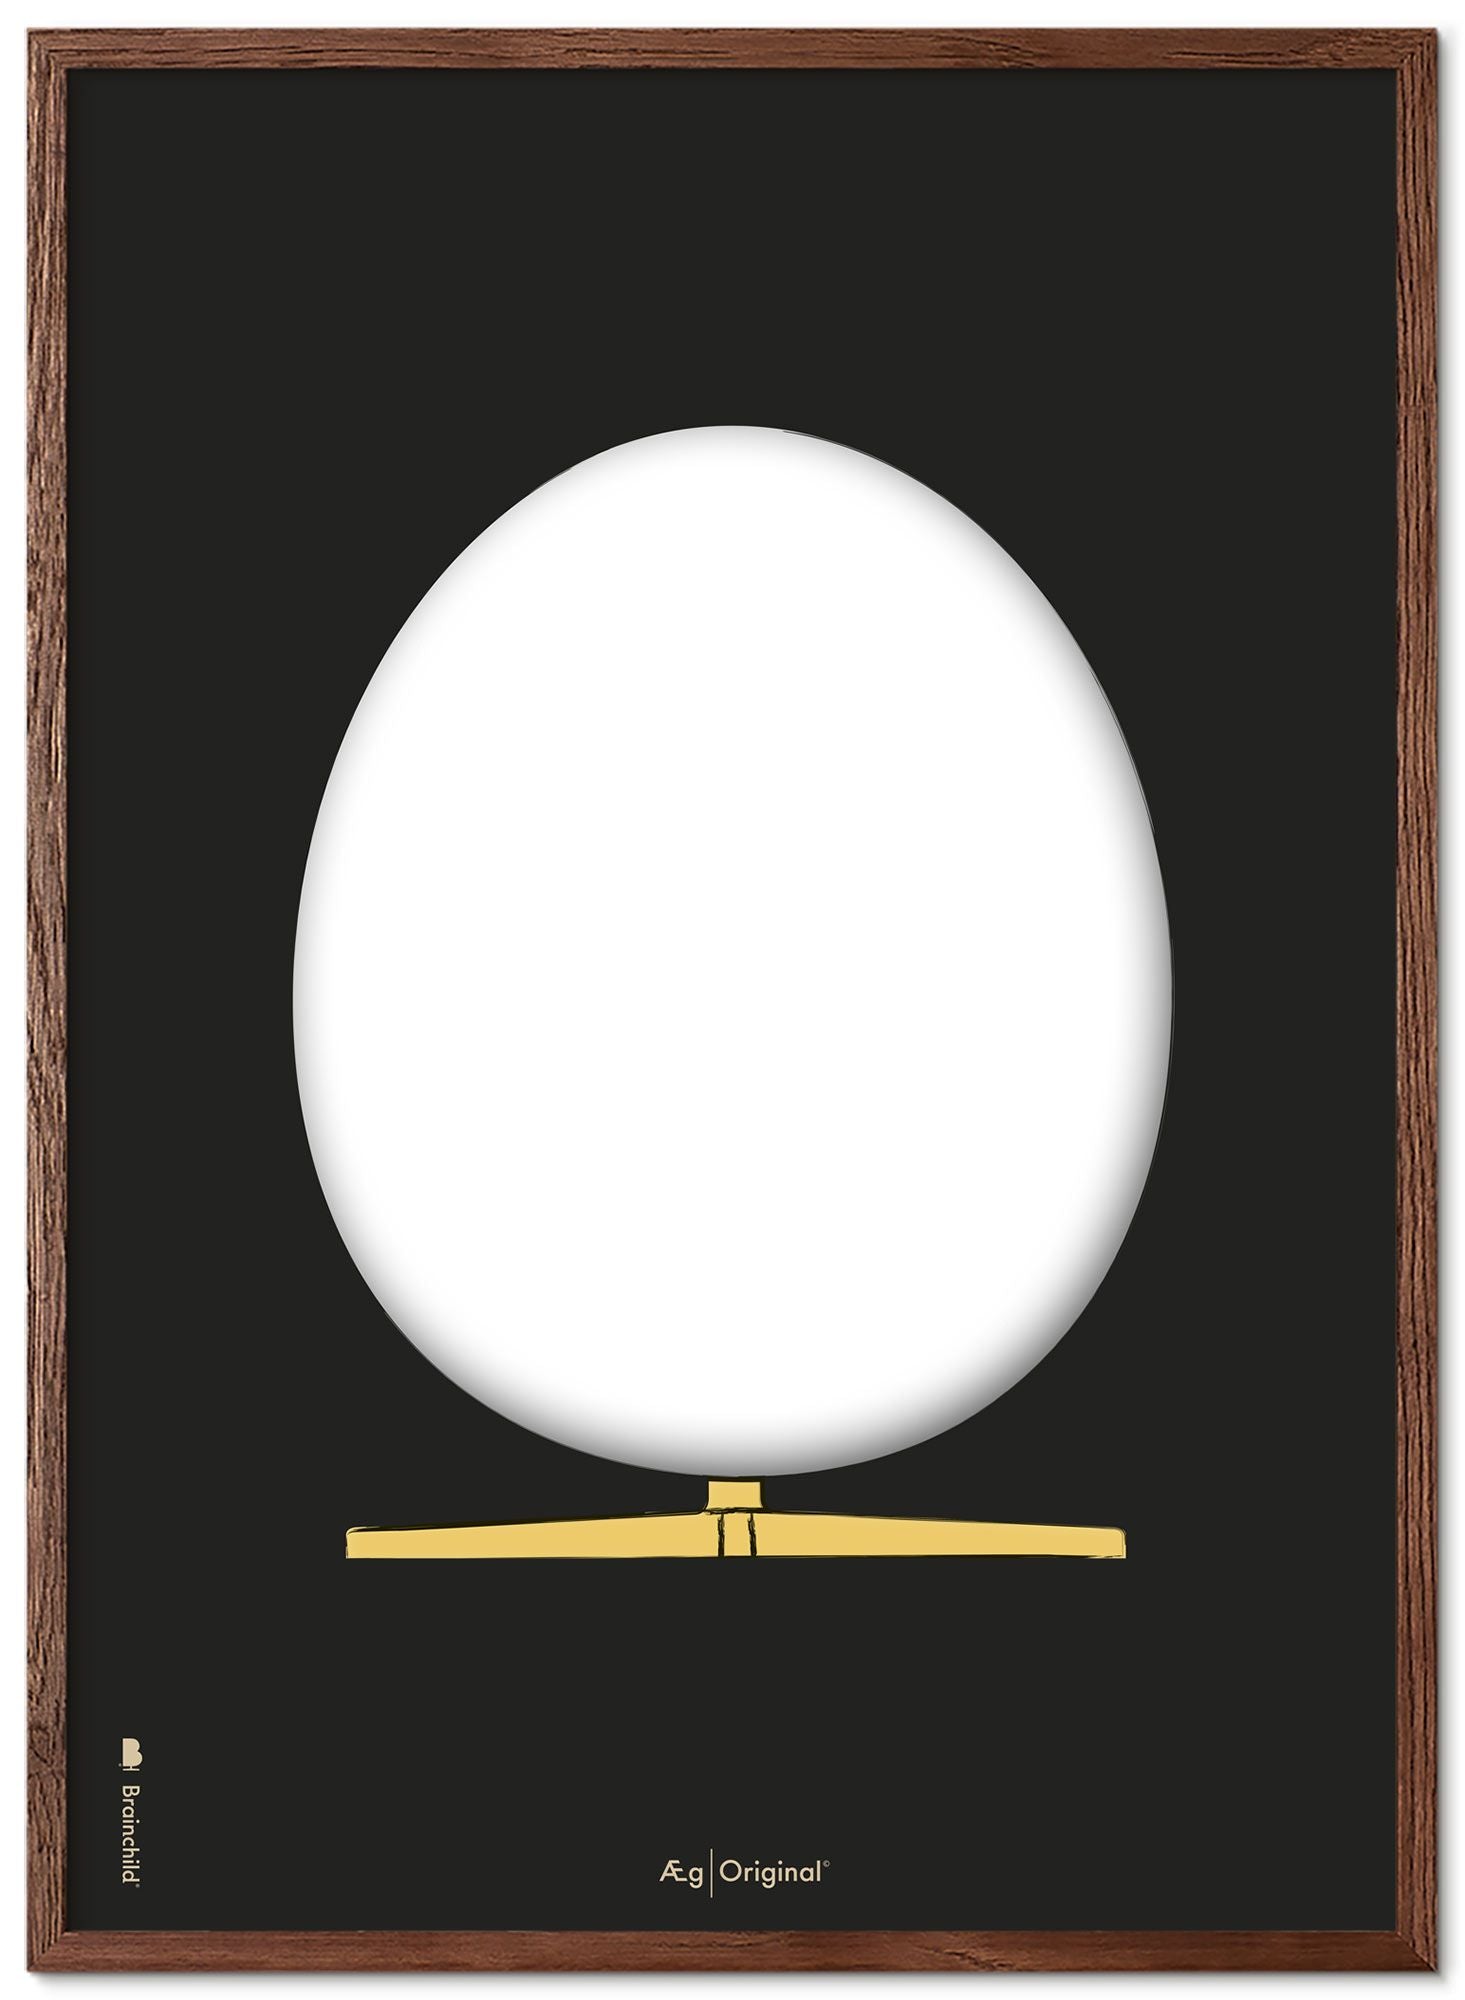 Brainchild The Egg Design Sketch Poster Frame Made Of Dark Wood 70x100 Cm, Black Background